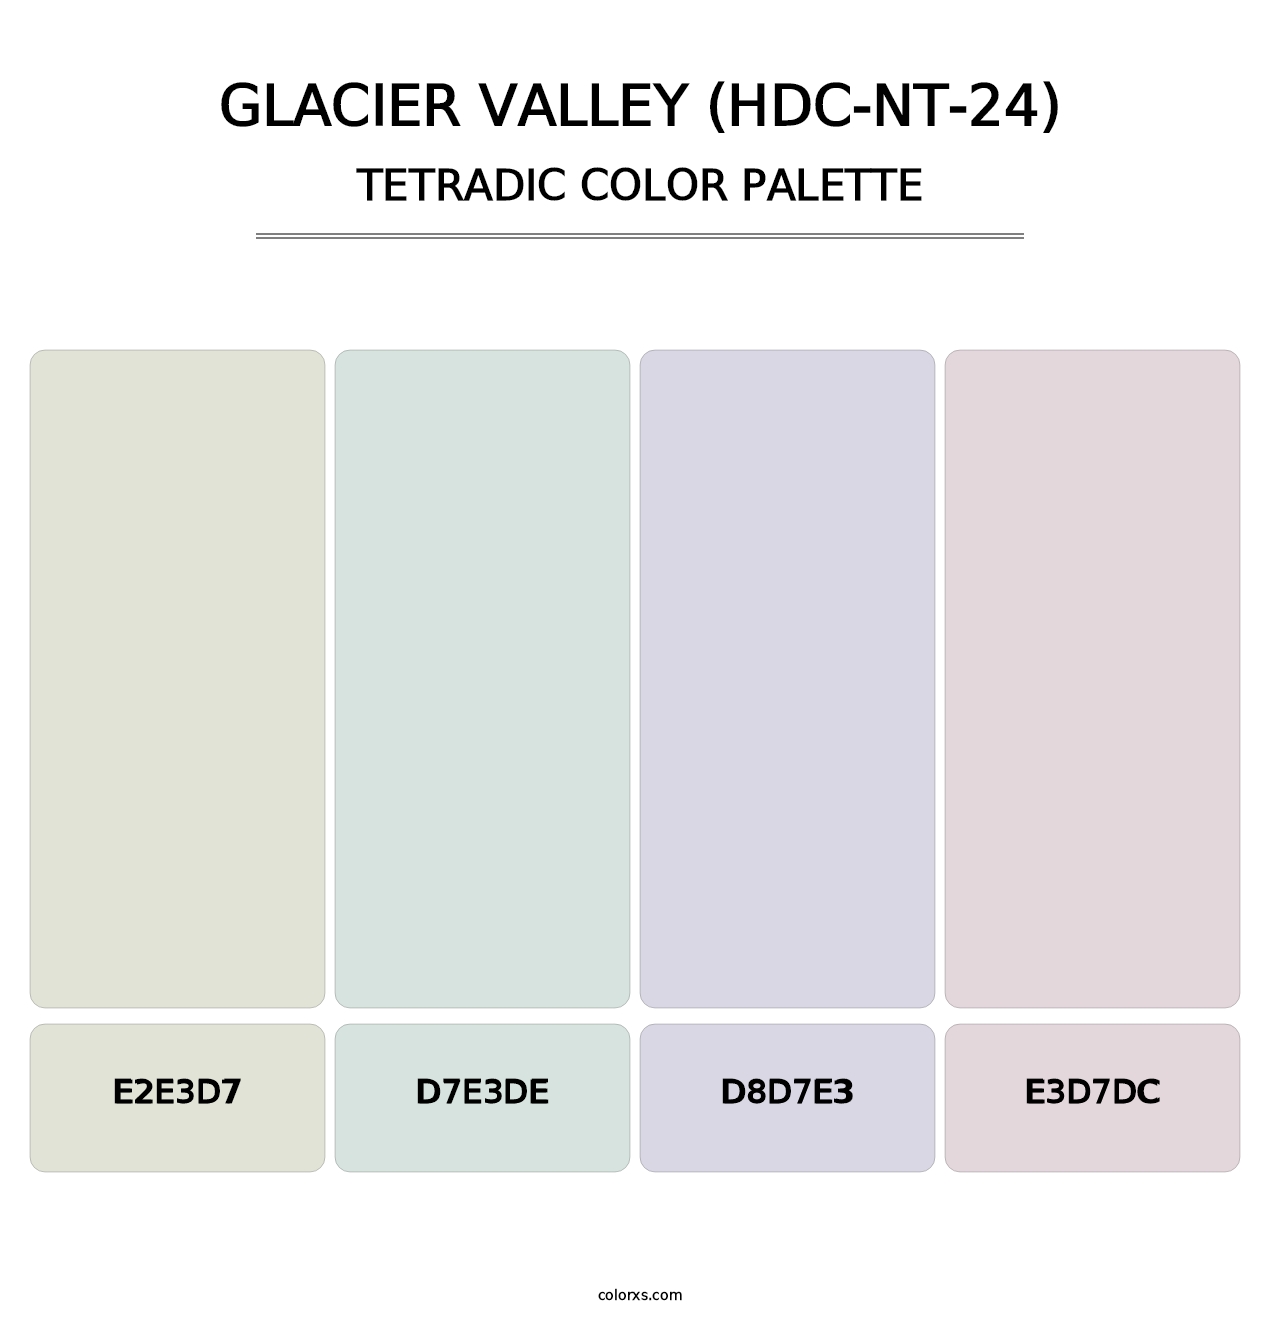 Glacier Valley (HDC-NT-24) - Tetradic Color Palette